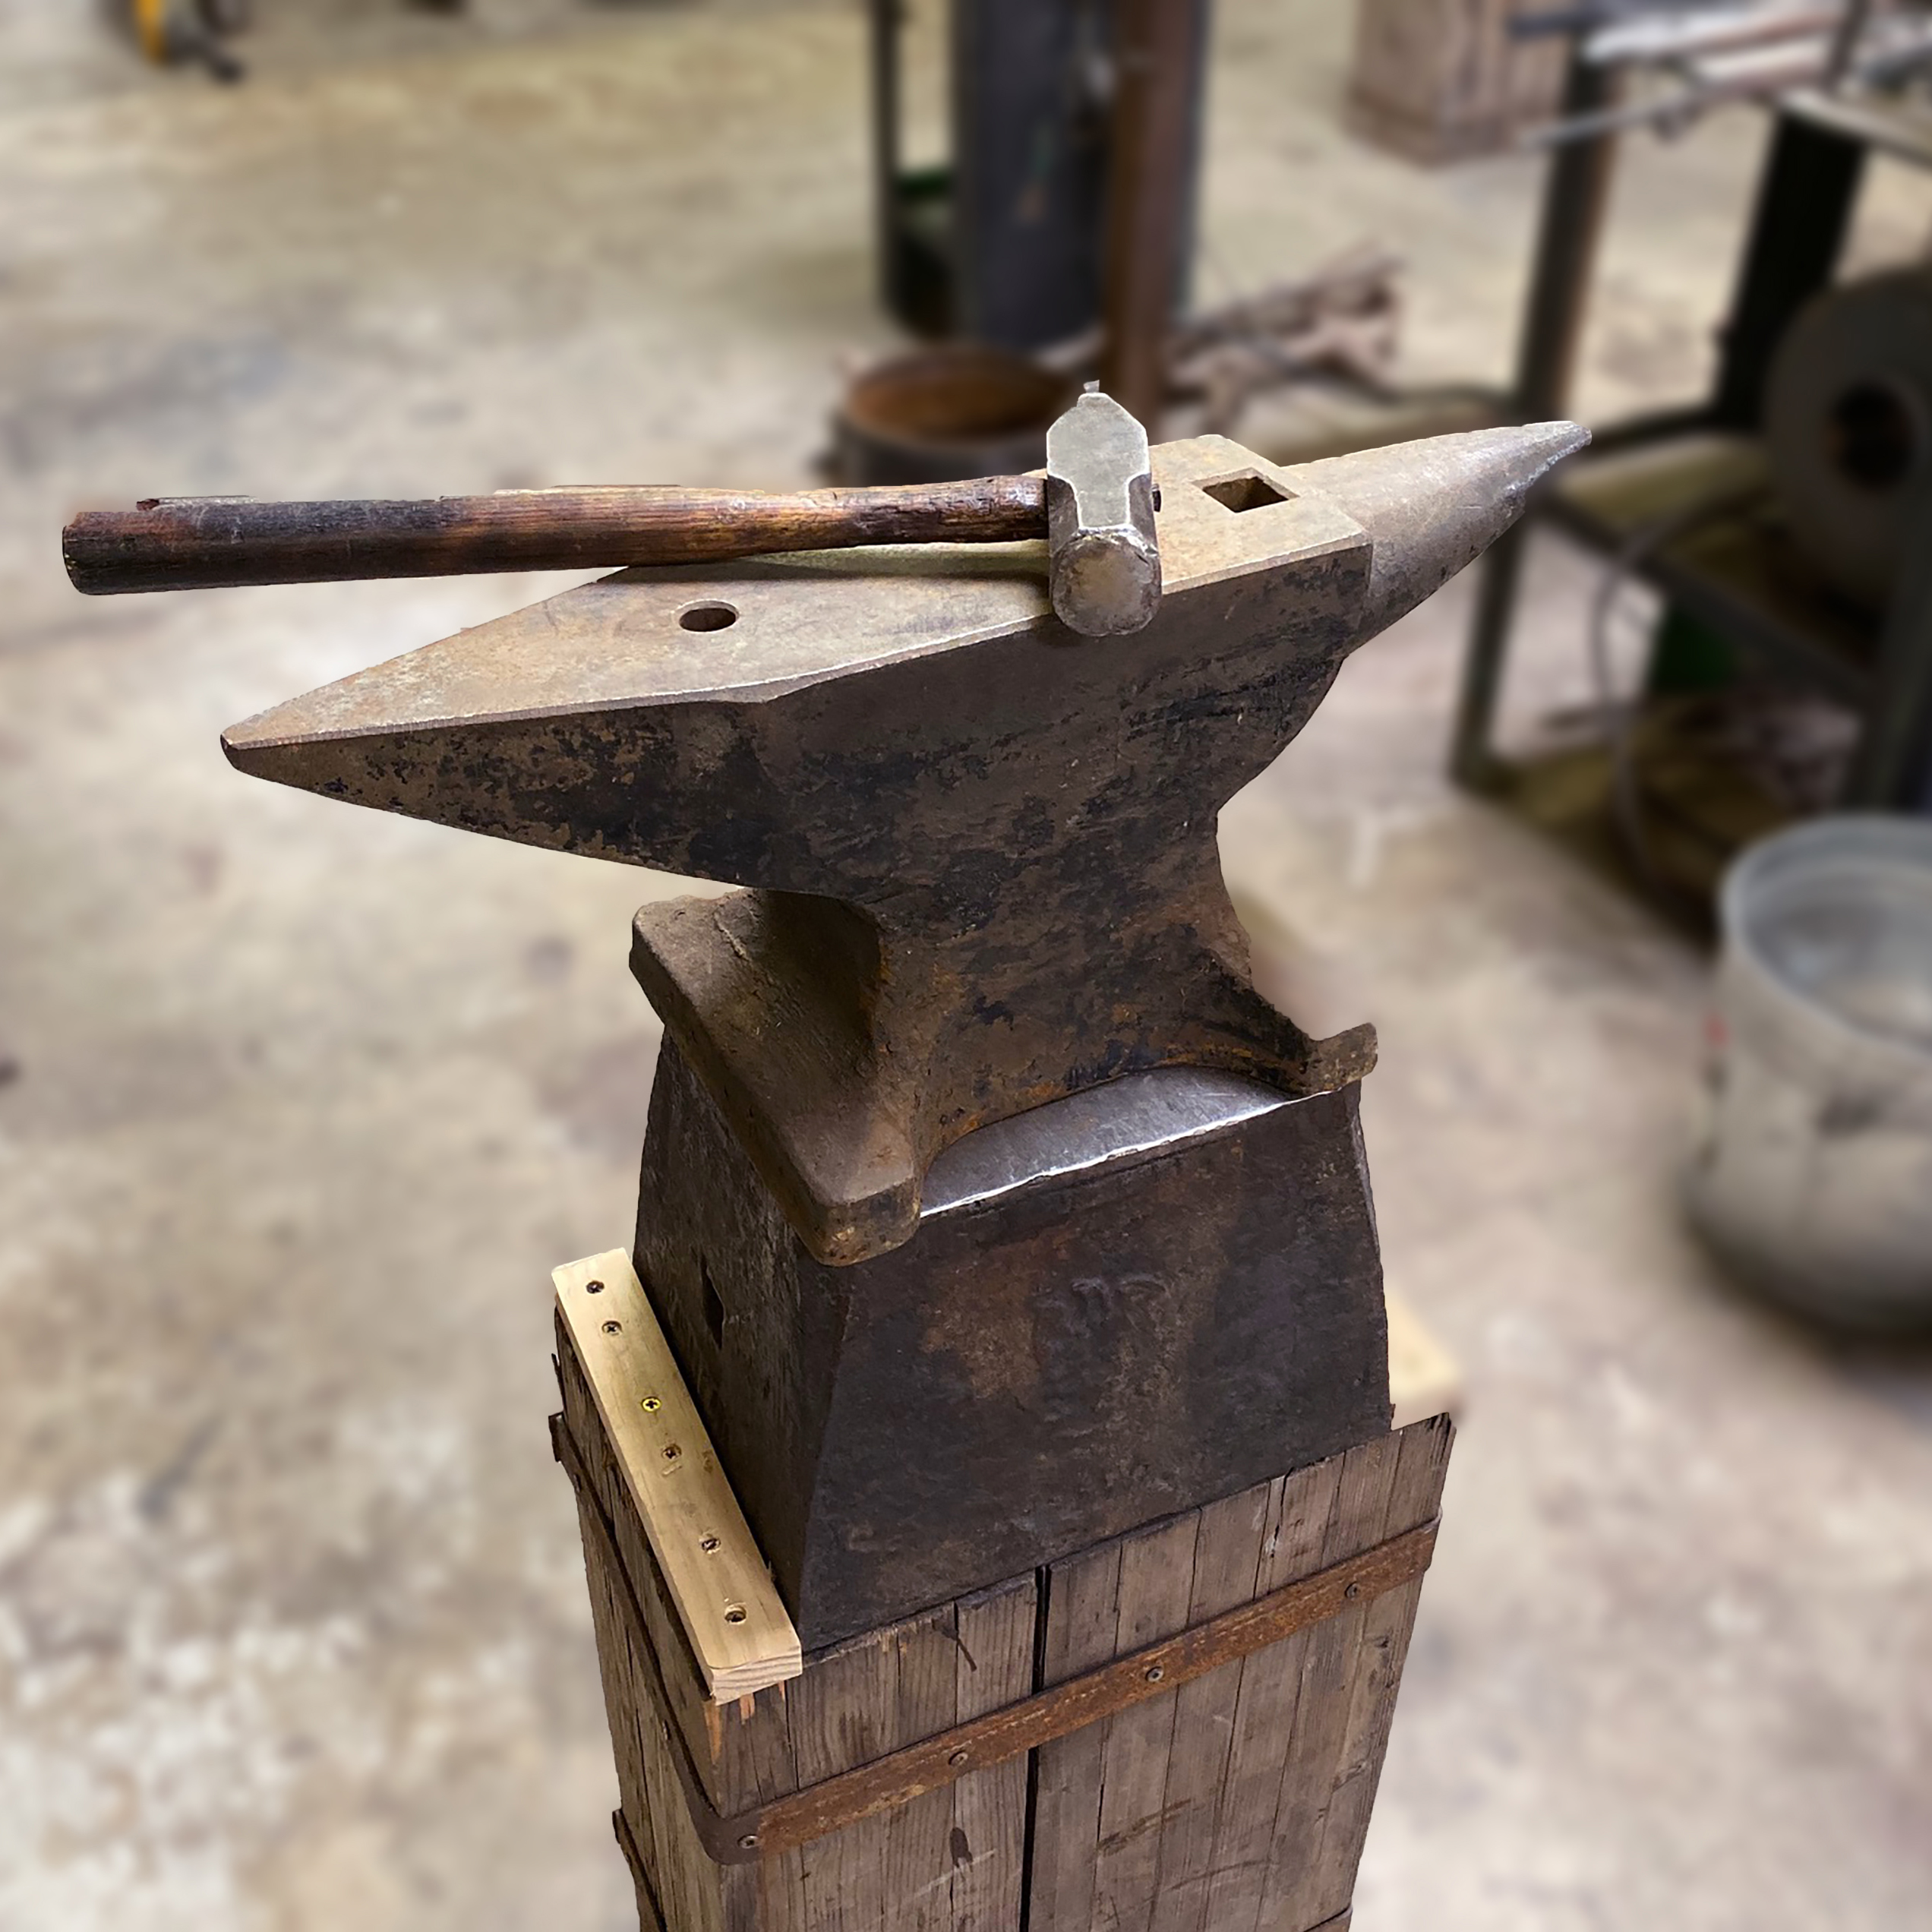 Hammer on an anvil